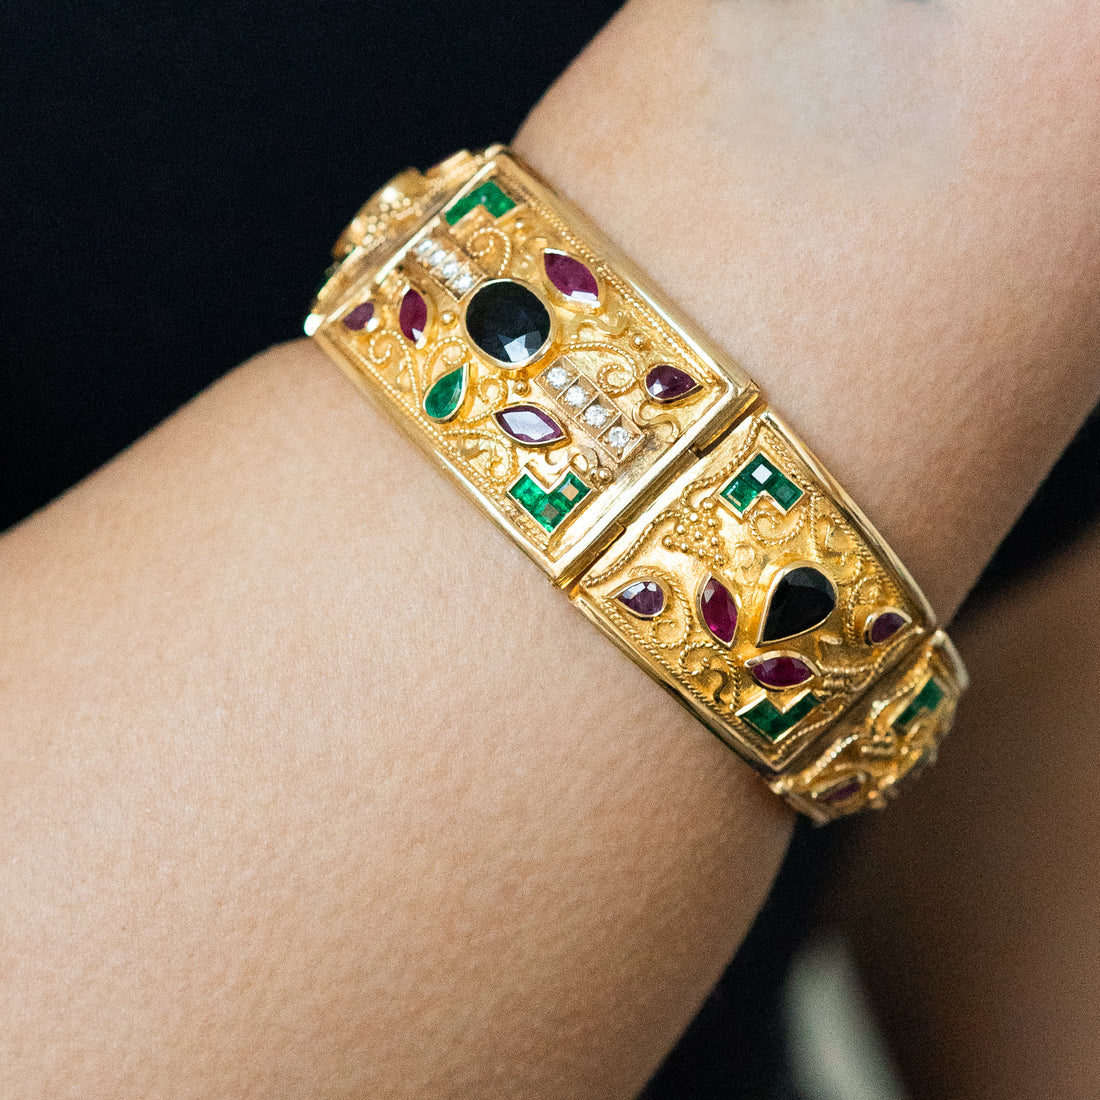 Queen Style Bracelet with Mixed Gemstones